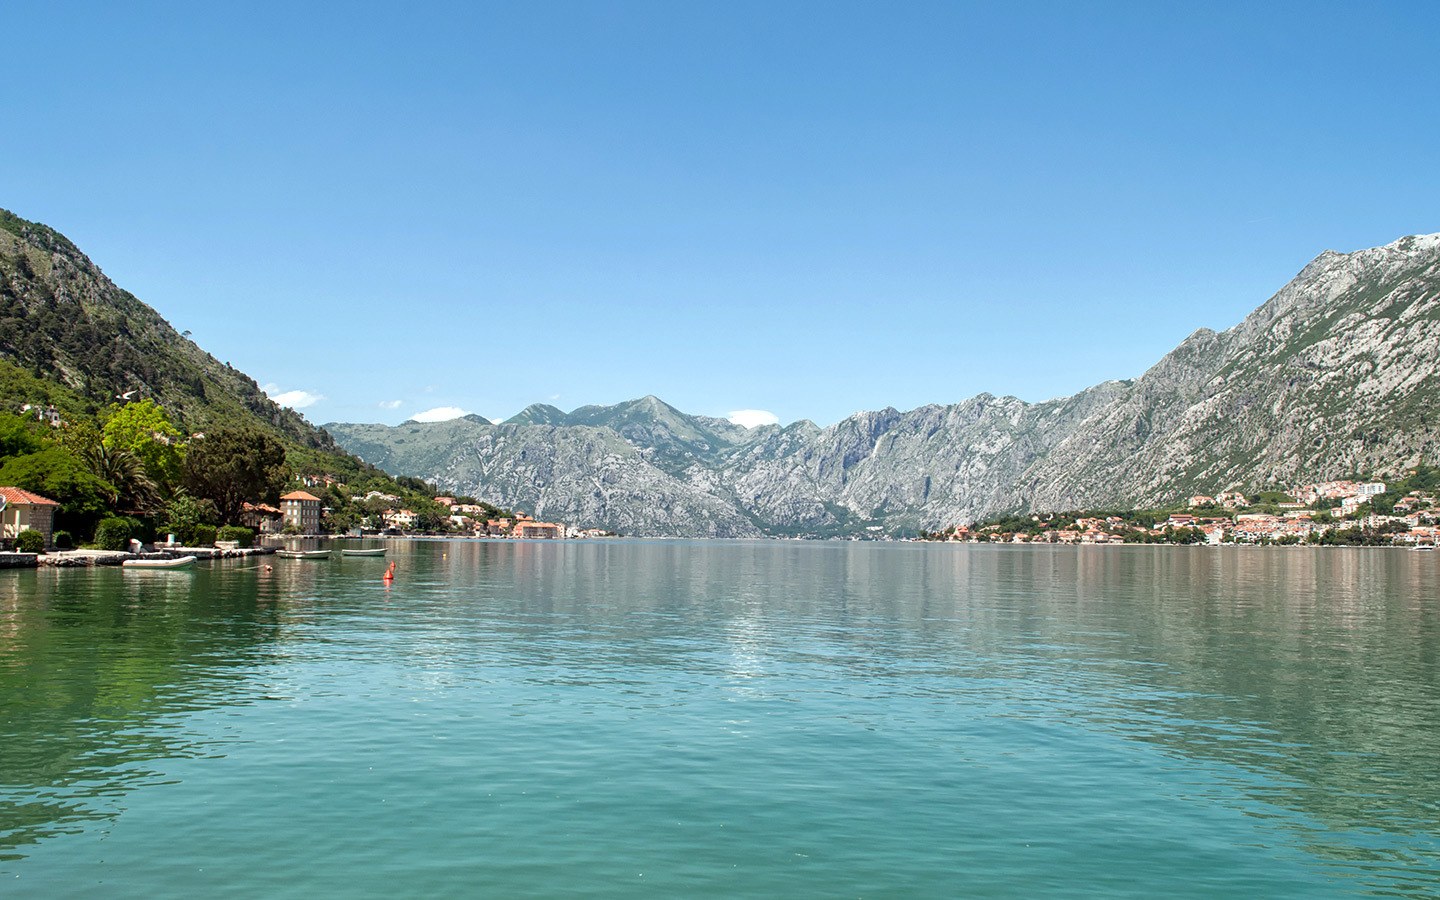 The Bay of Kotor